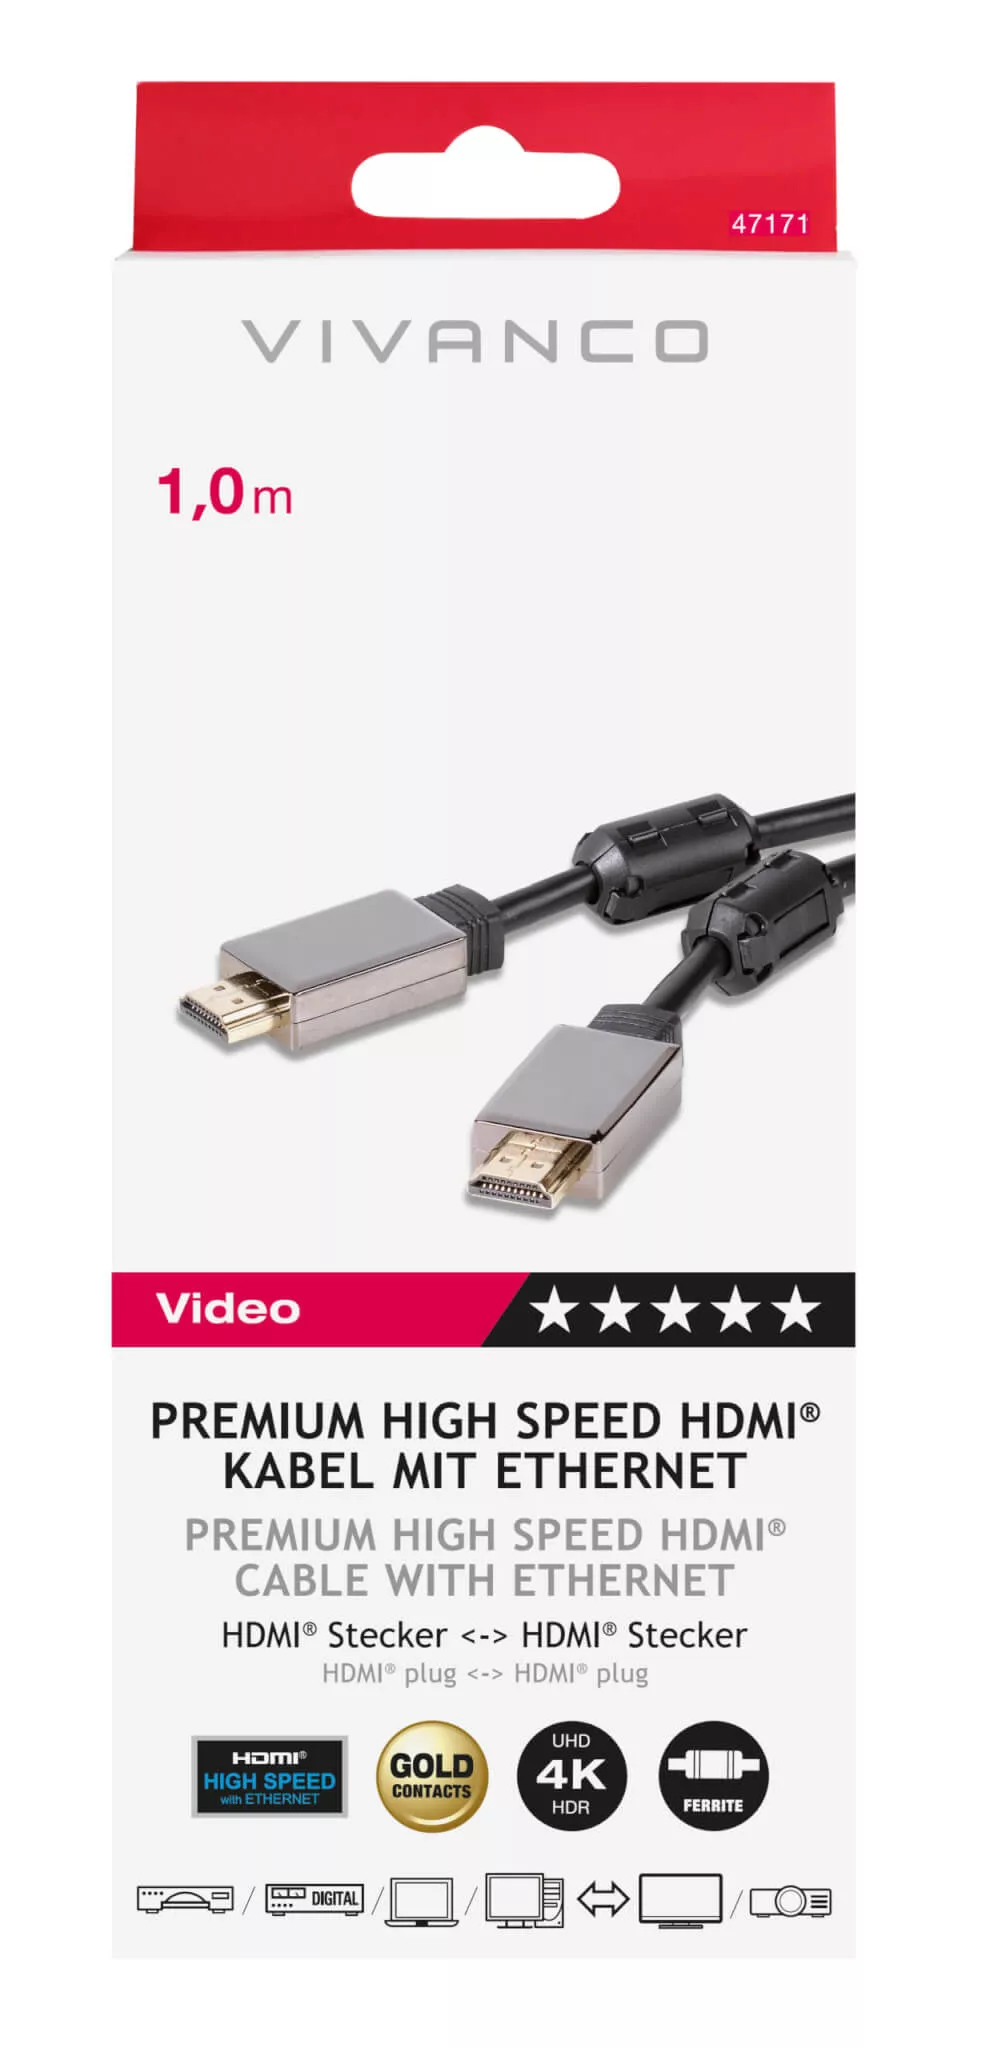 47171 Cable HDMI VIVANCO Video 5* 1.0m 2.0b 4k - 47171 - 0